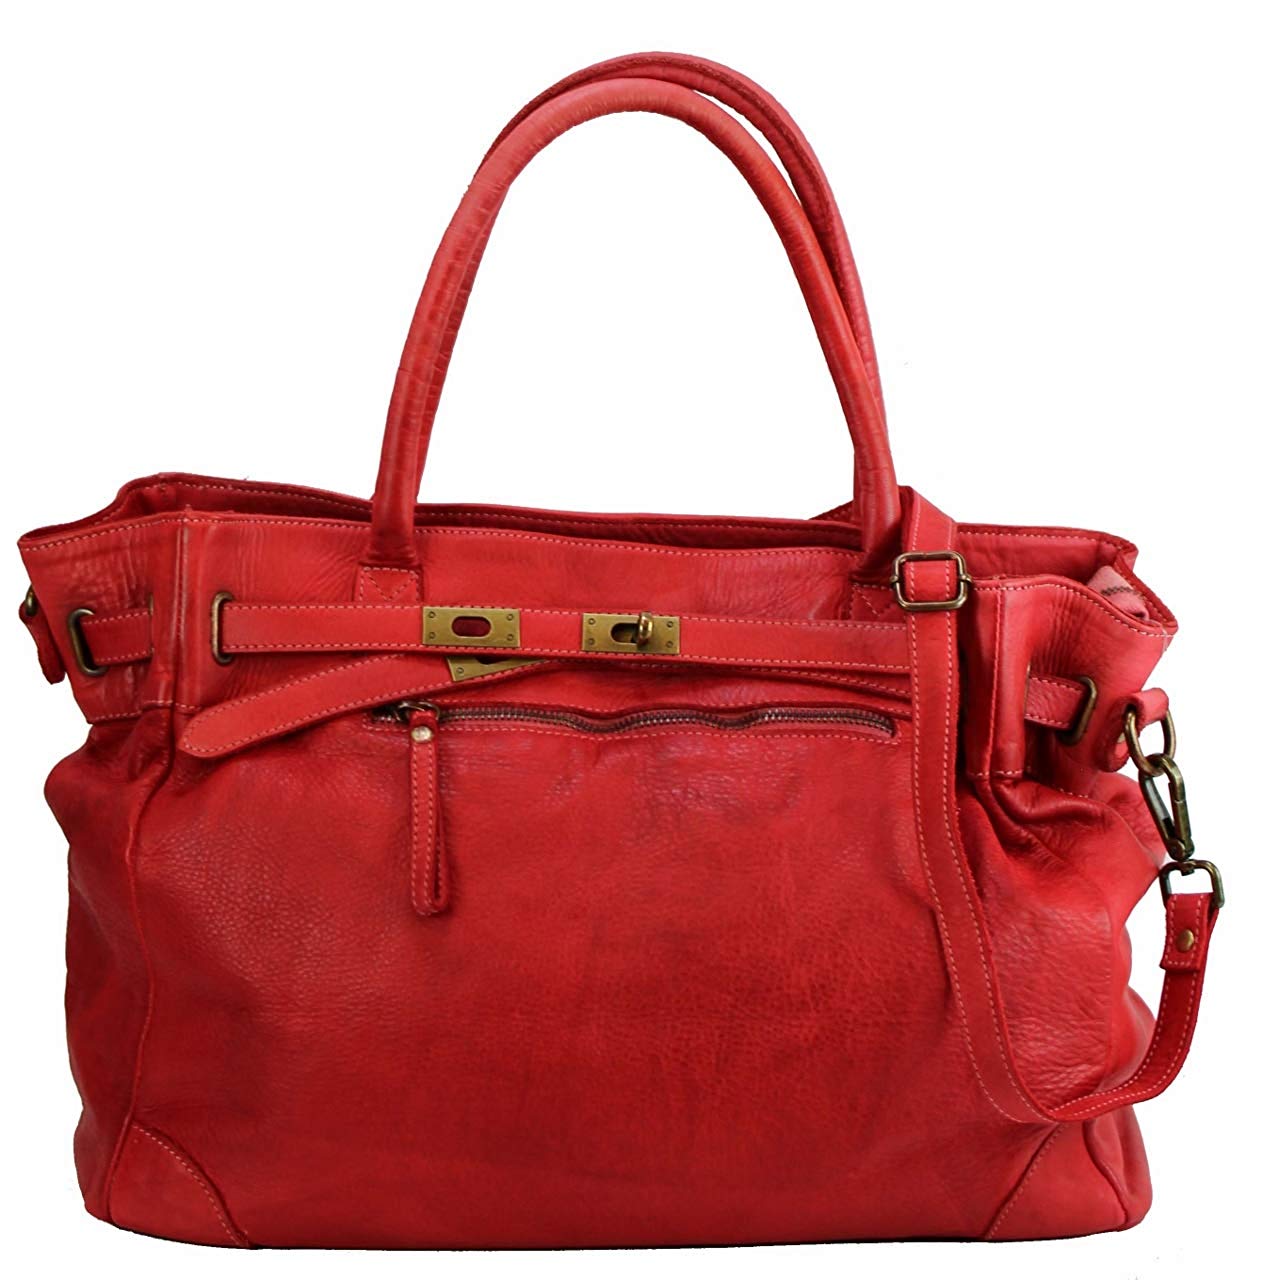 BZNA Bag Mila Rot rosso vintage Italy Designer Business Damen Handtasche Ledertasche Schultertasche Tasche Leder Shopper Neu